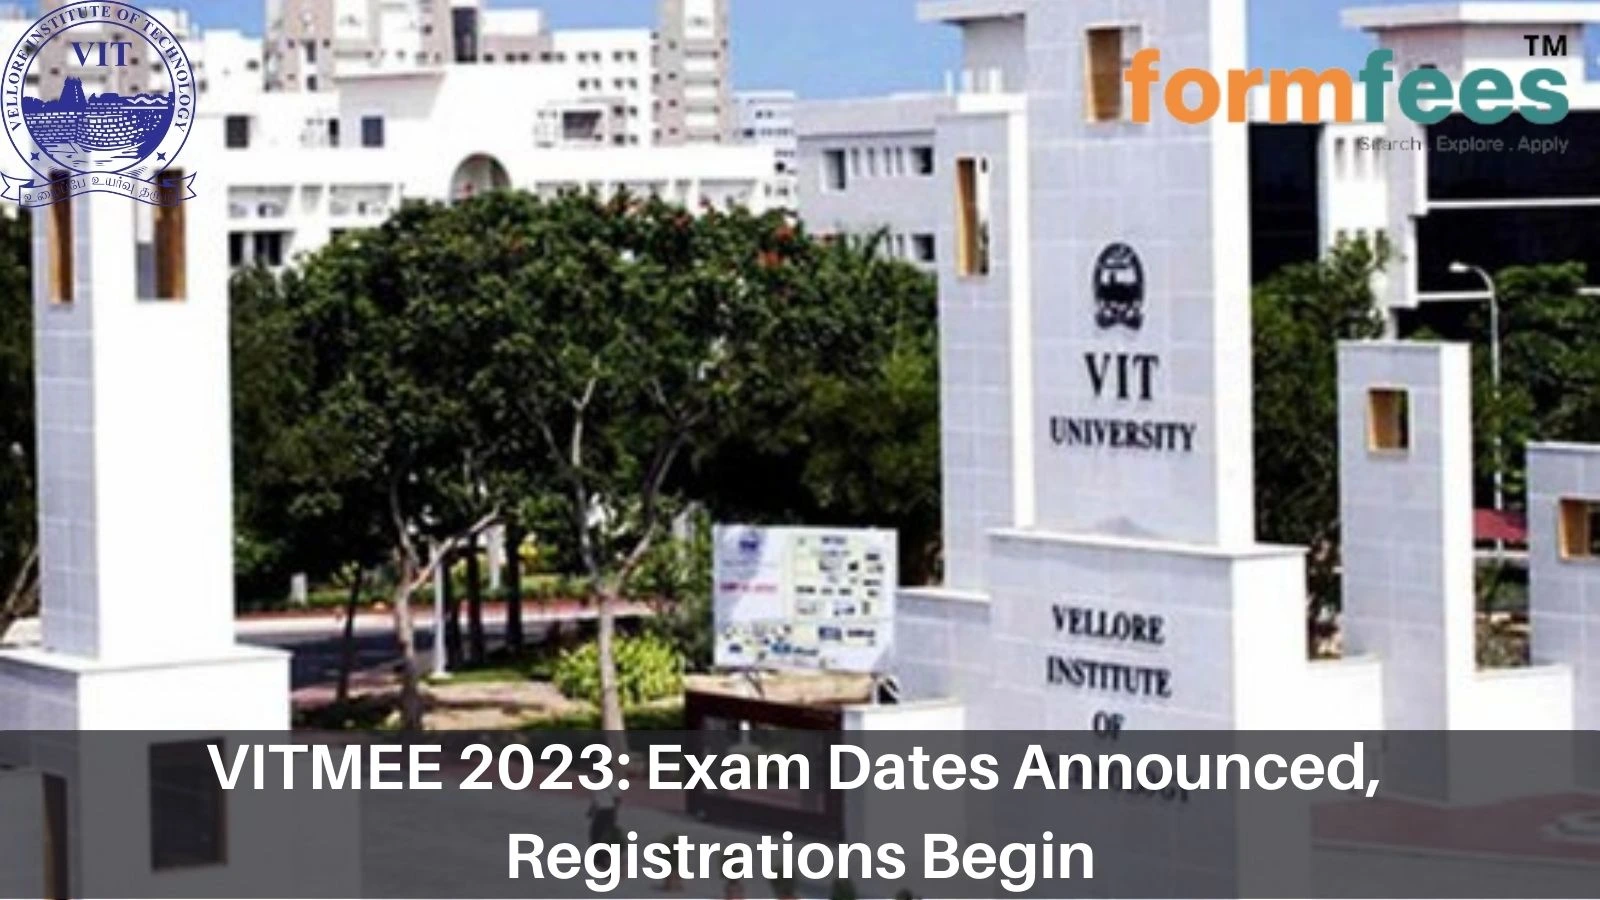 VITMEE 2023: Exam Dates Announced, Registrations Begin